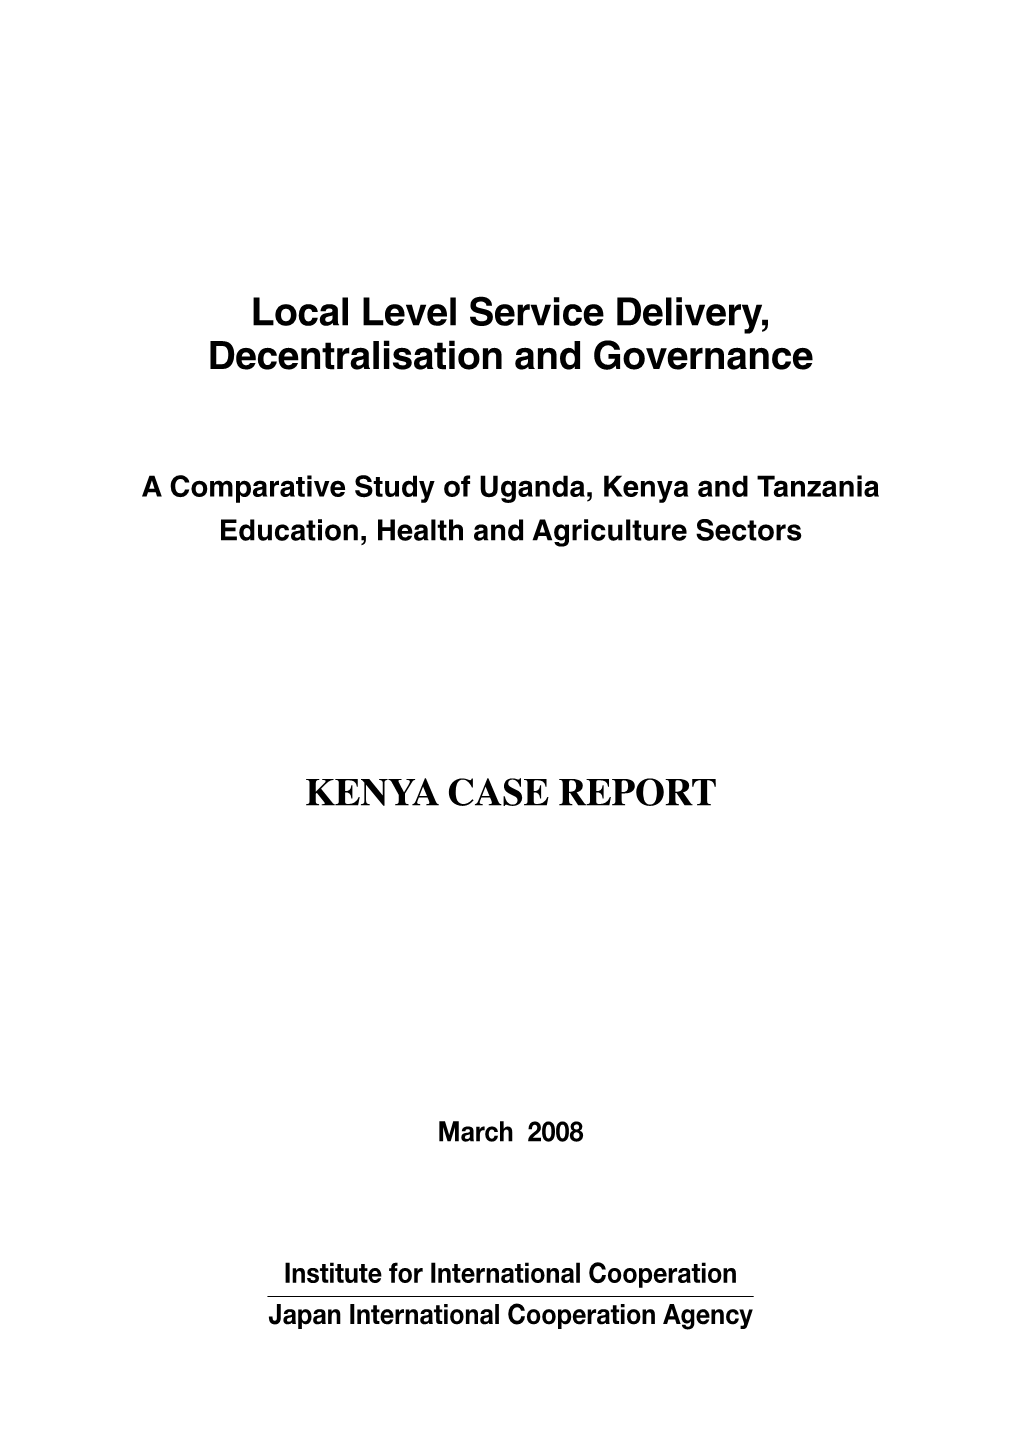 Kenya Case Report